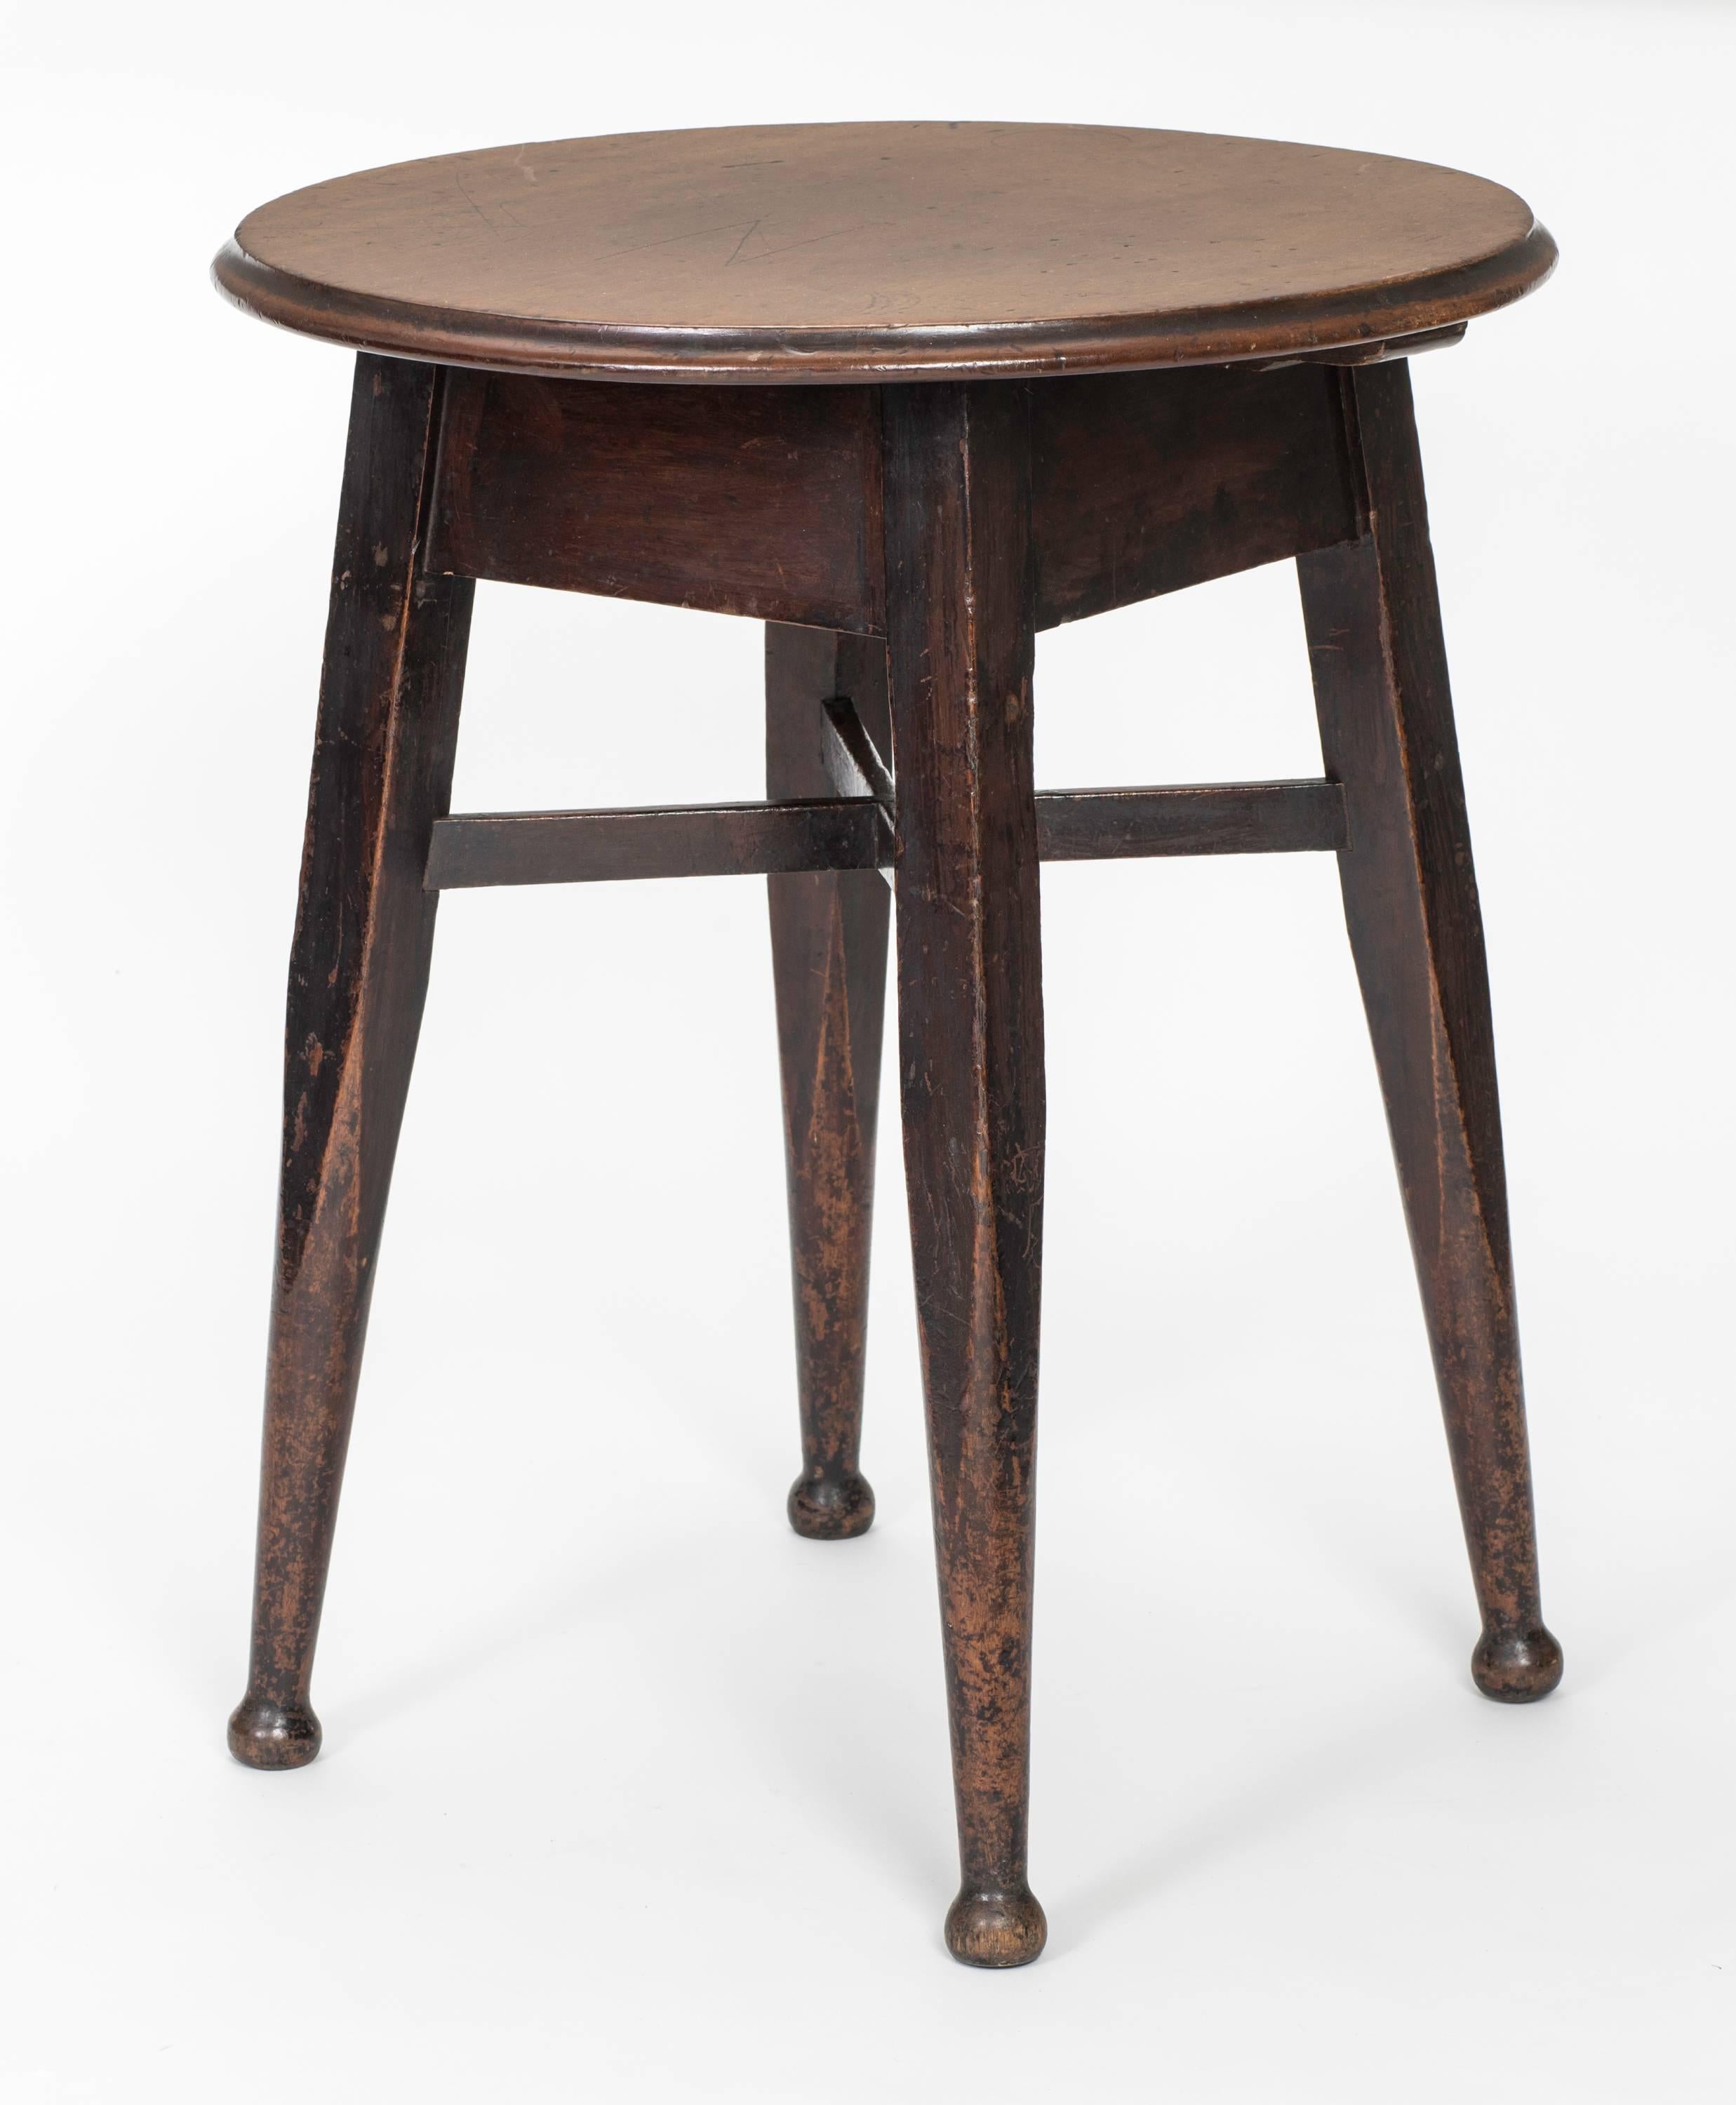 Walnut English Round Side Table, circa 1900s